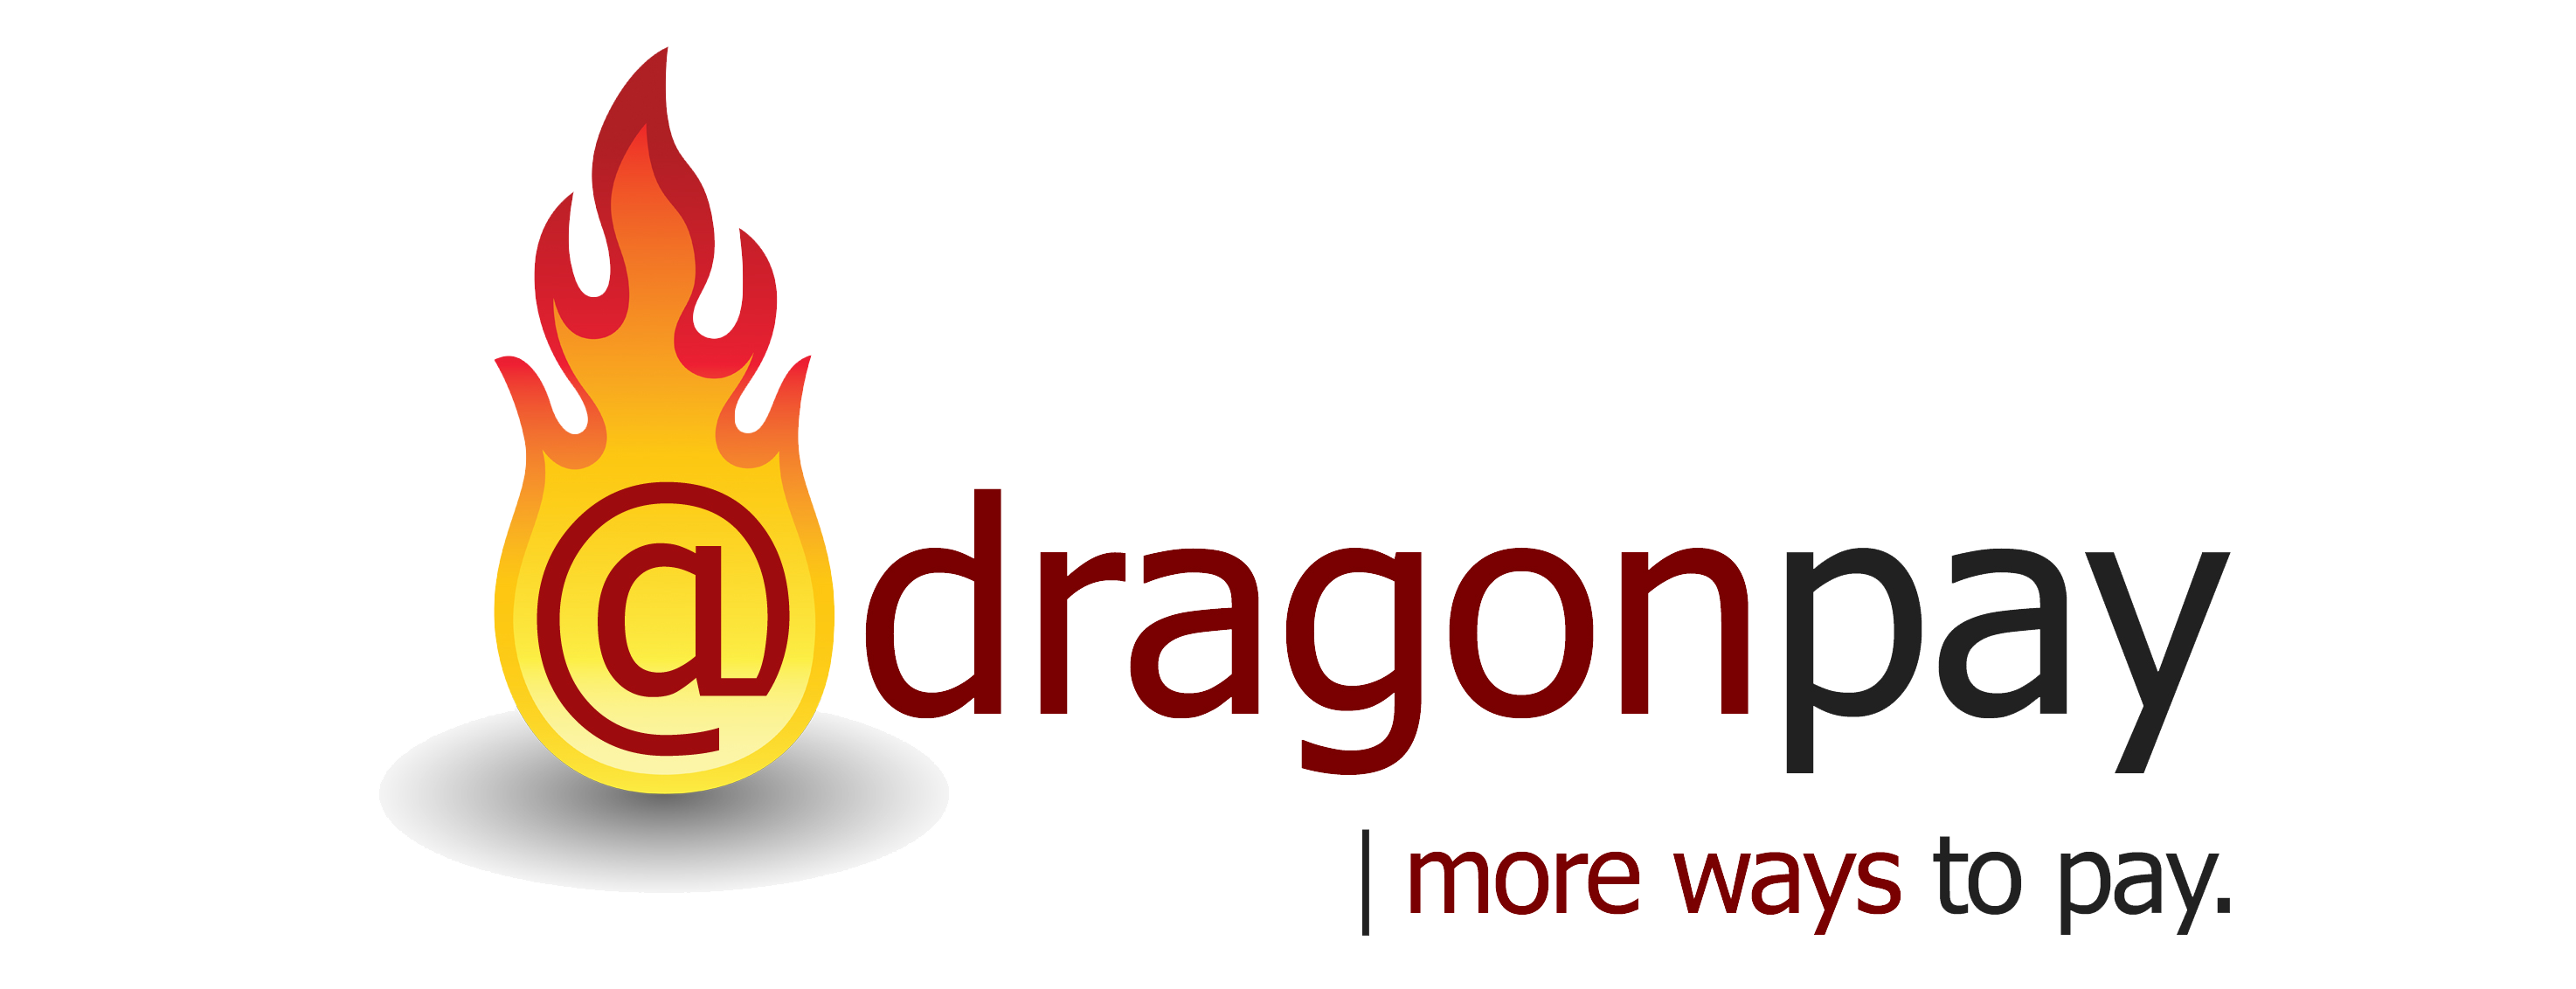 Dragon Pay